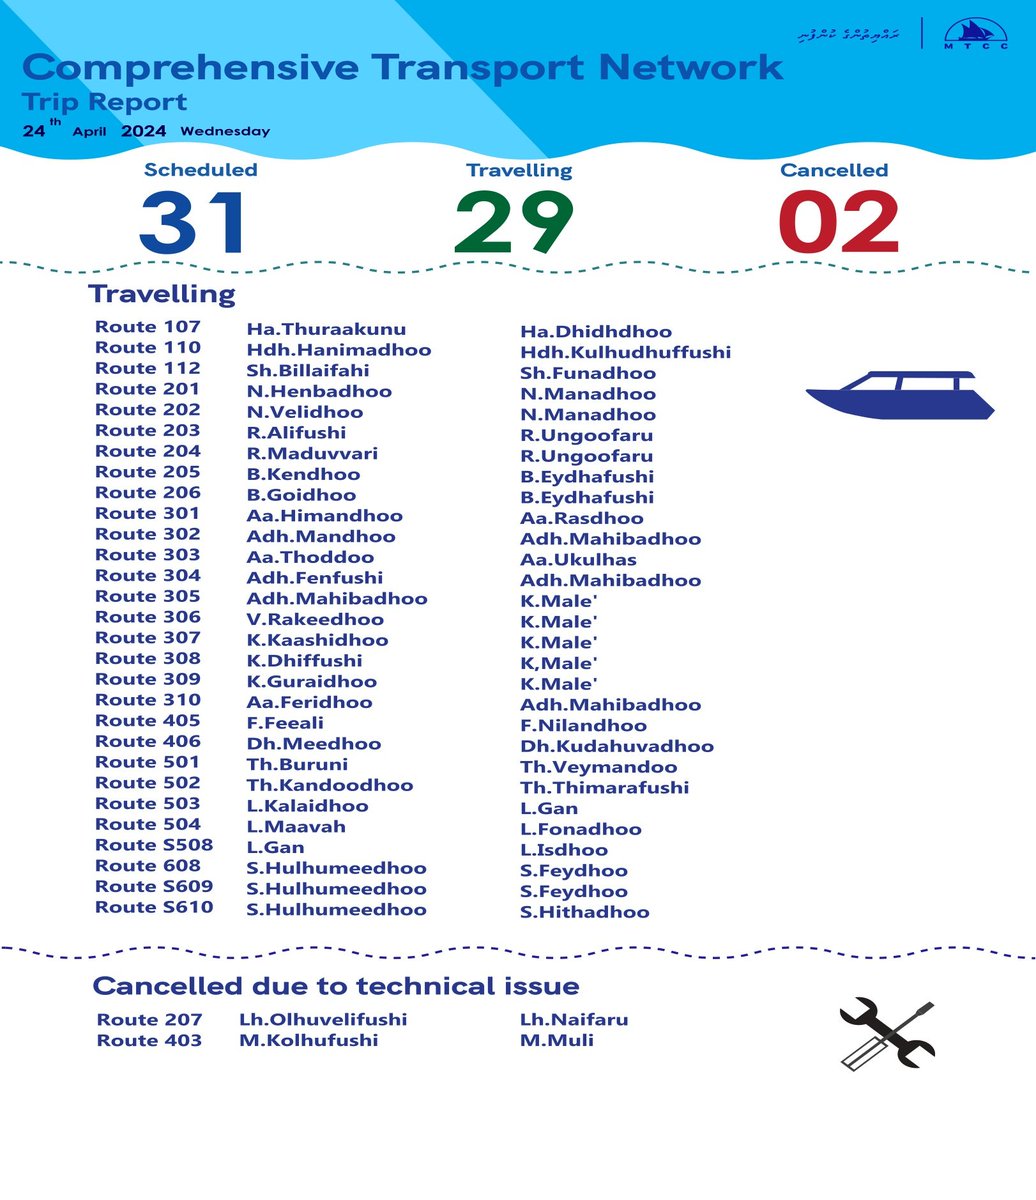 Today's CTN ferry trip report. #MTCCTransport #RayyithungeKunfuni